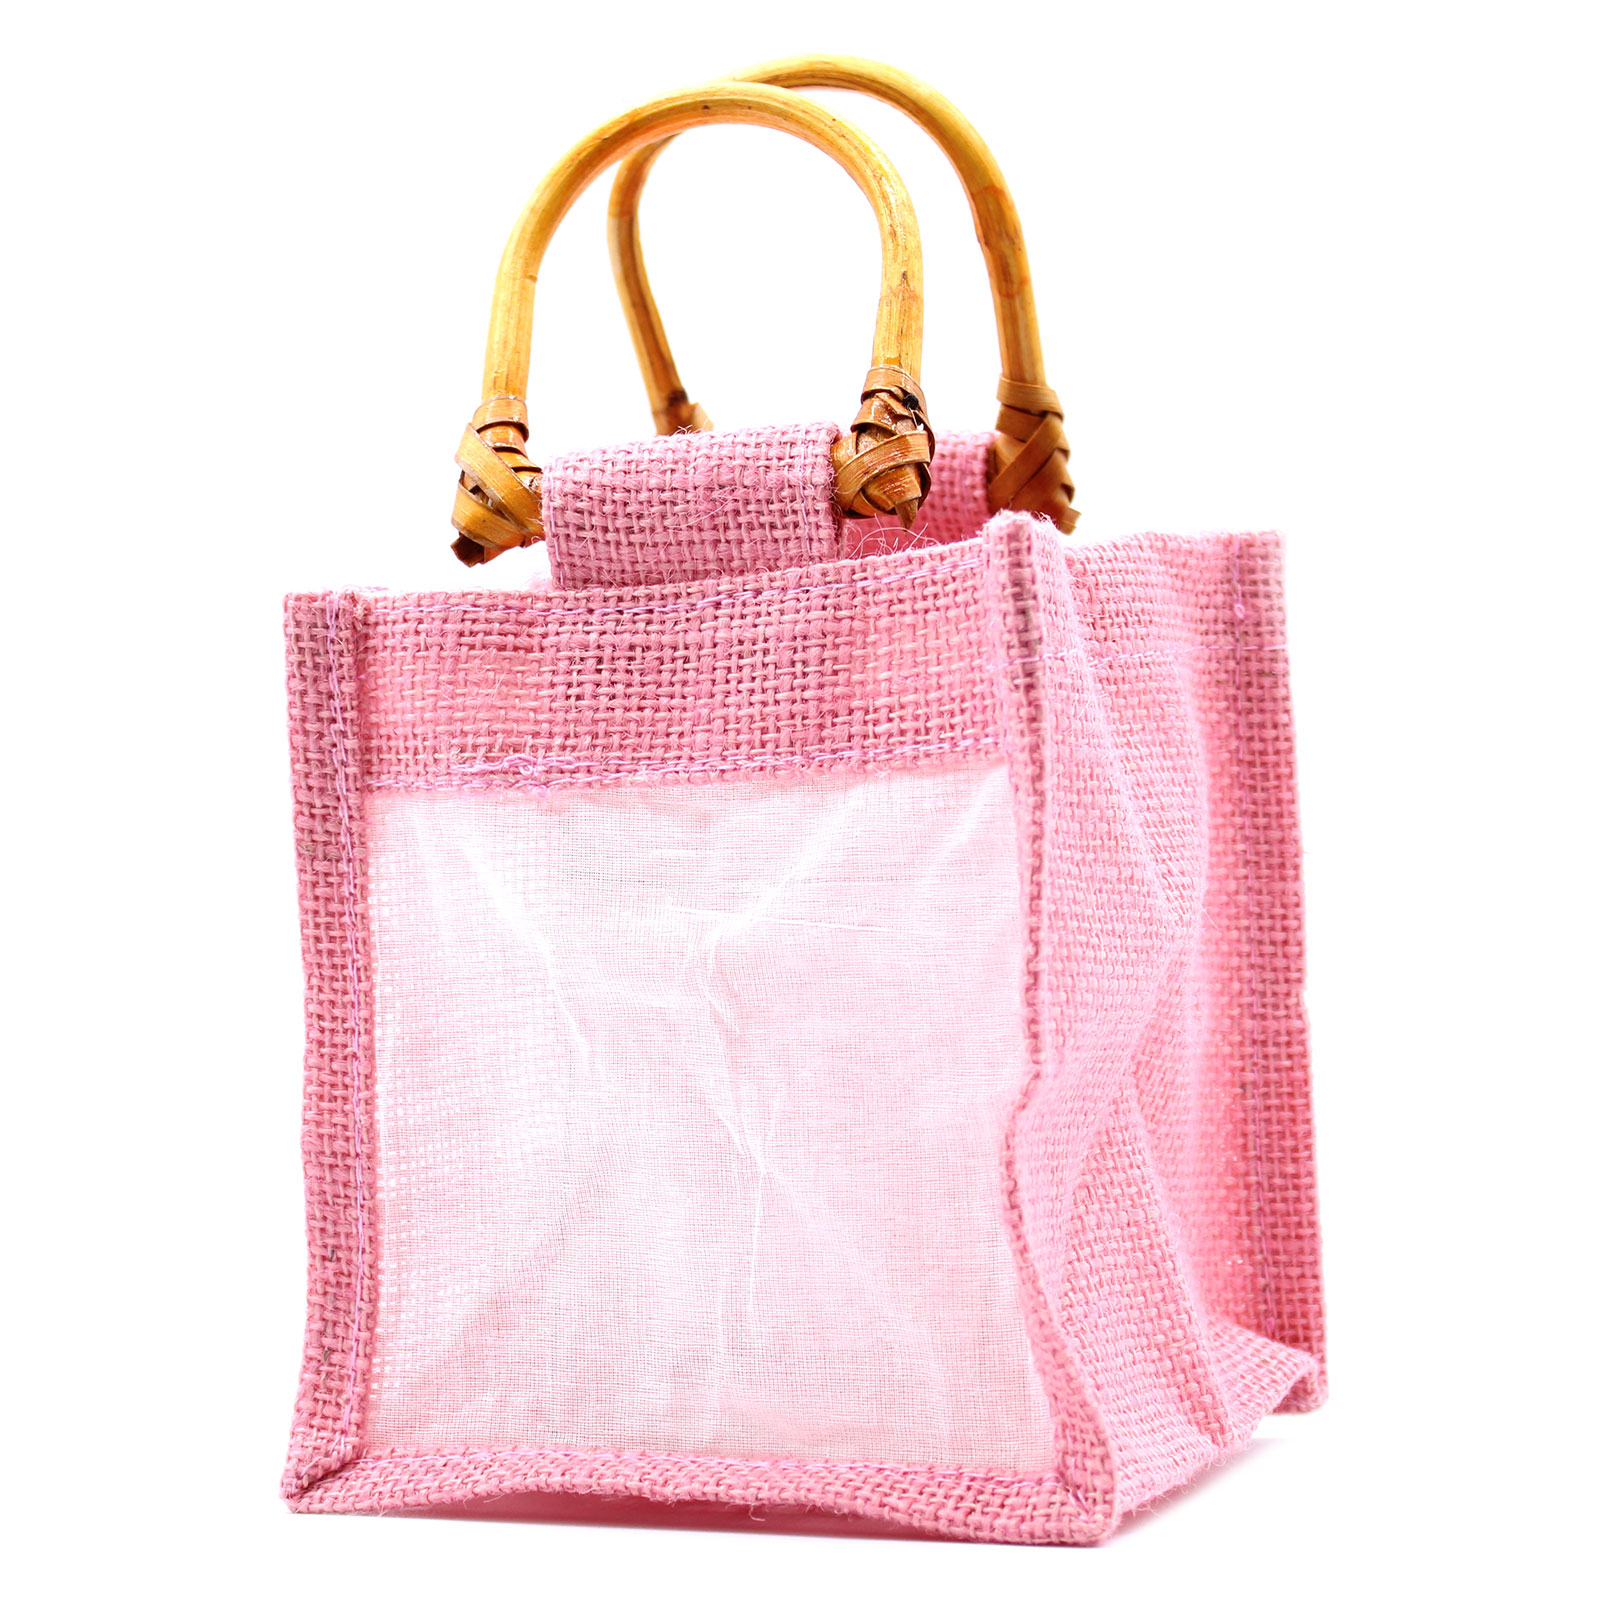 Dárková taška z juty a bavlny - Růžová - 1 okénko